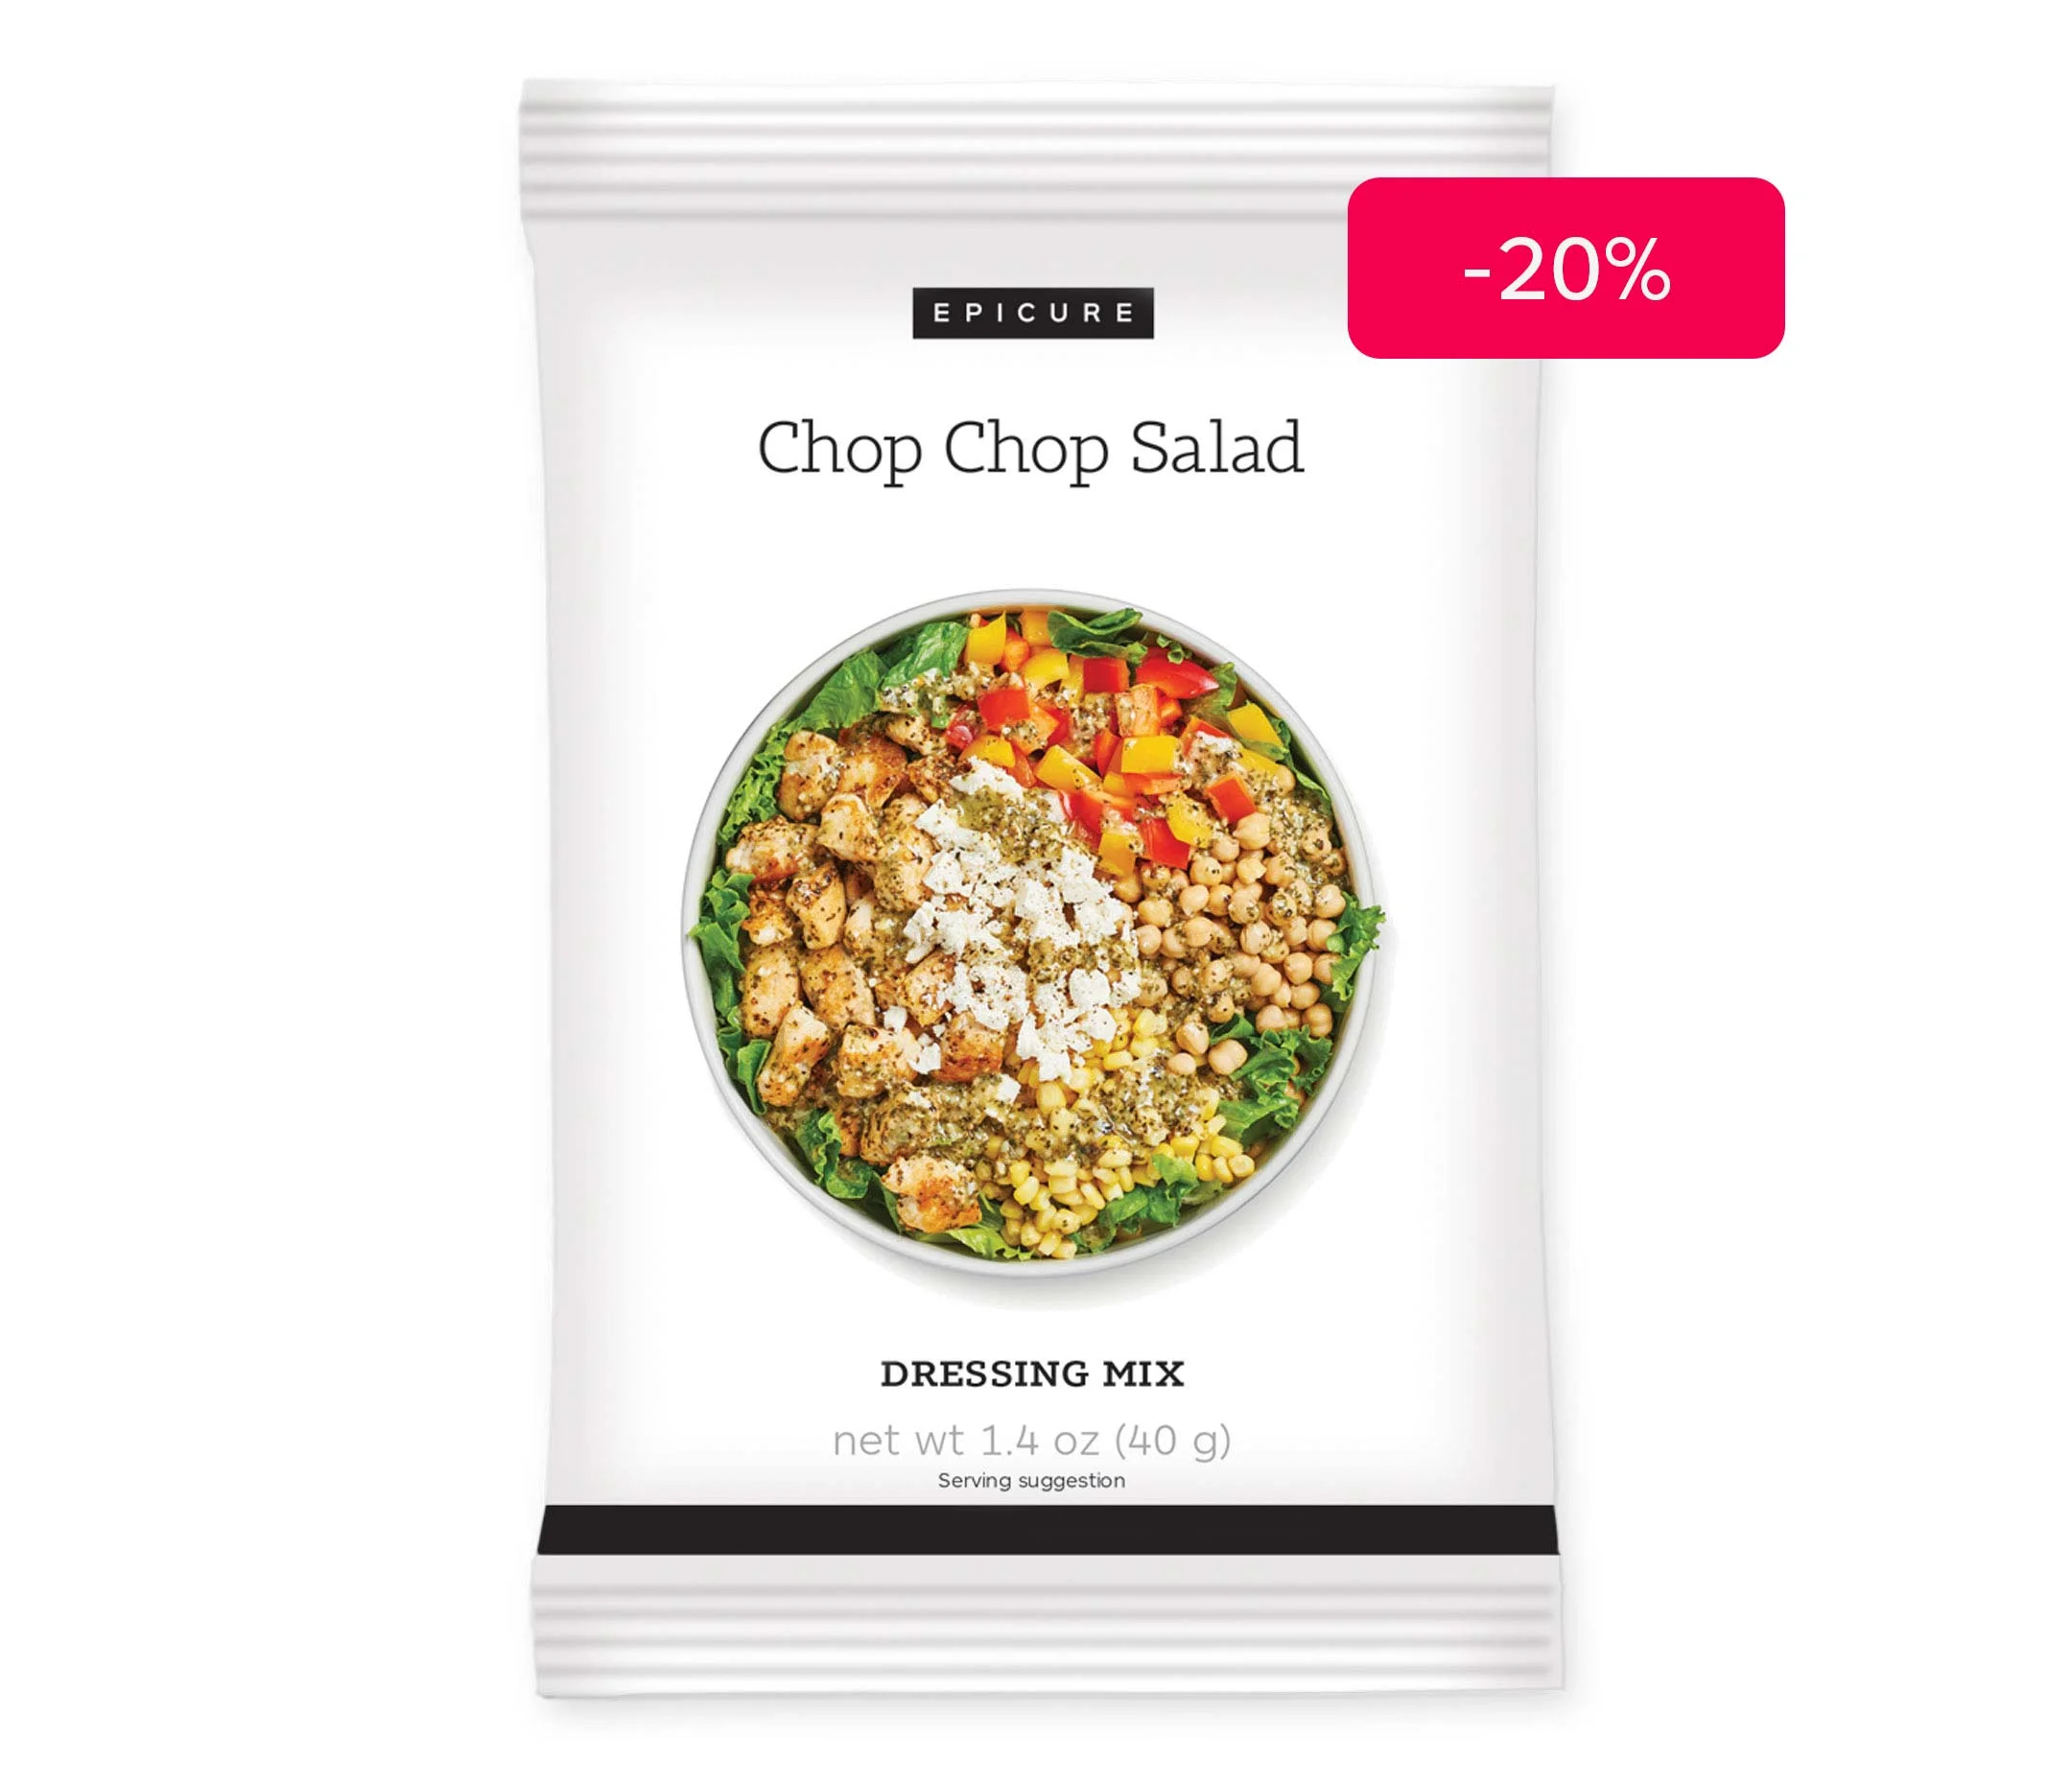 Chop Chop Salad Dressing Mix (Pkg of 3)